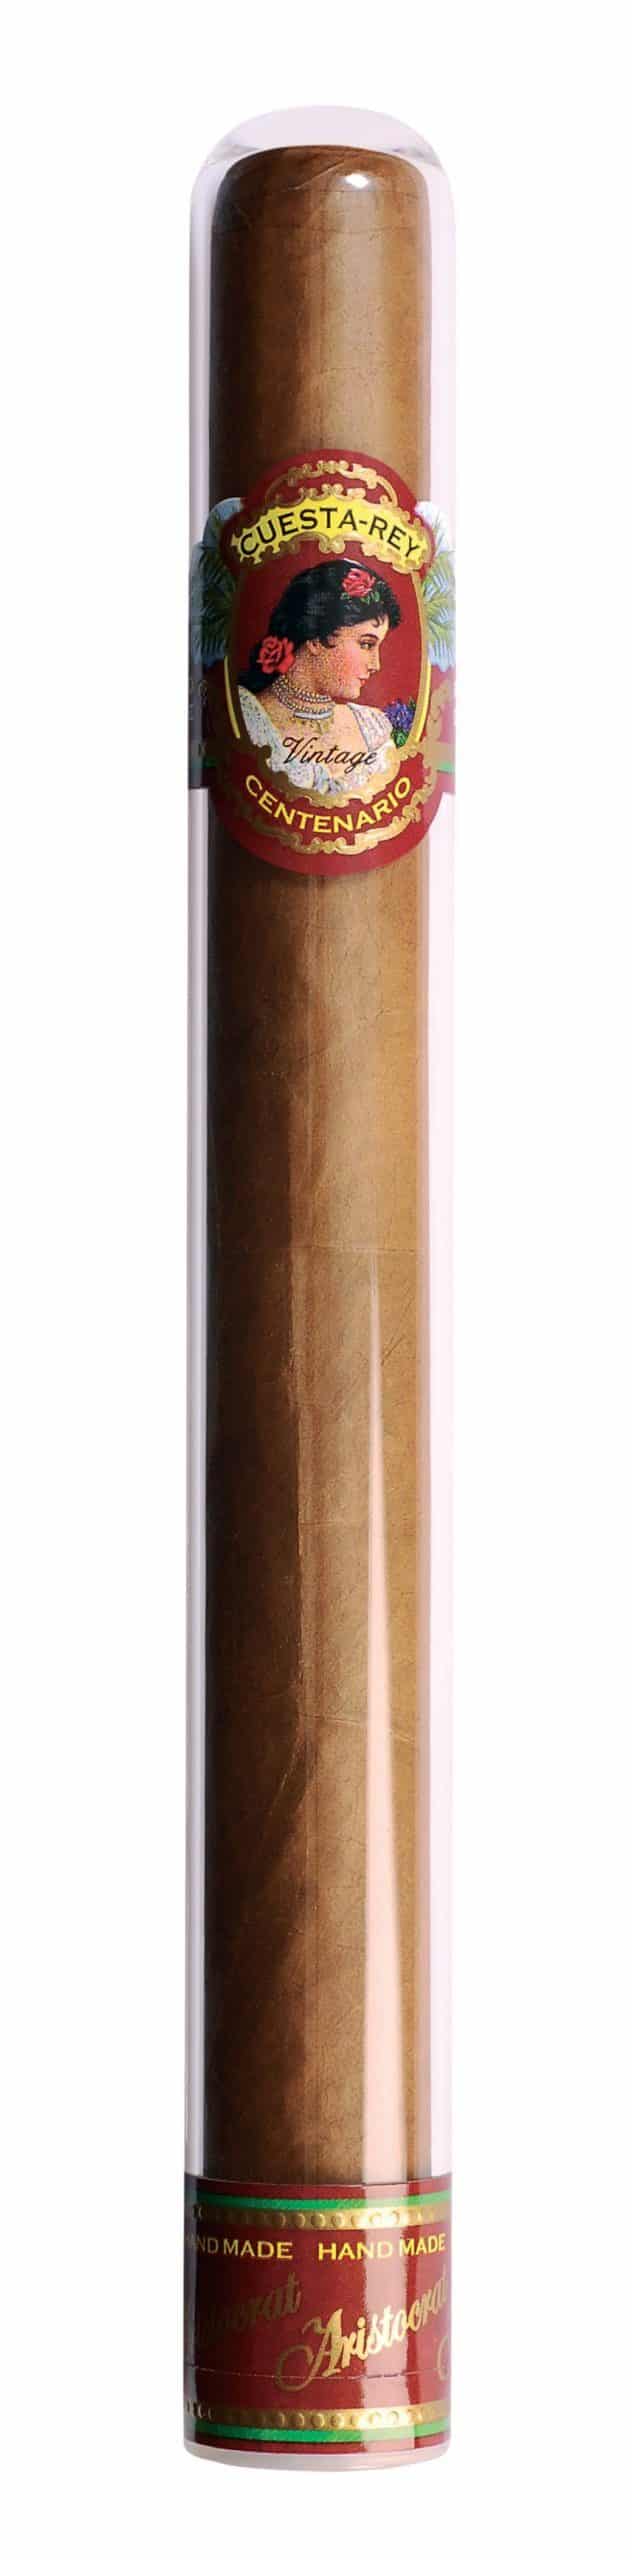 cuesta rey aristocrat tube single cigar